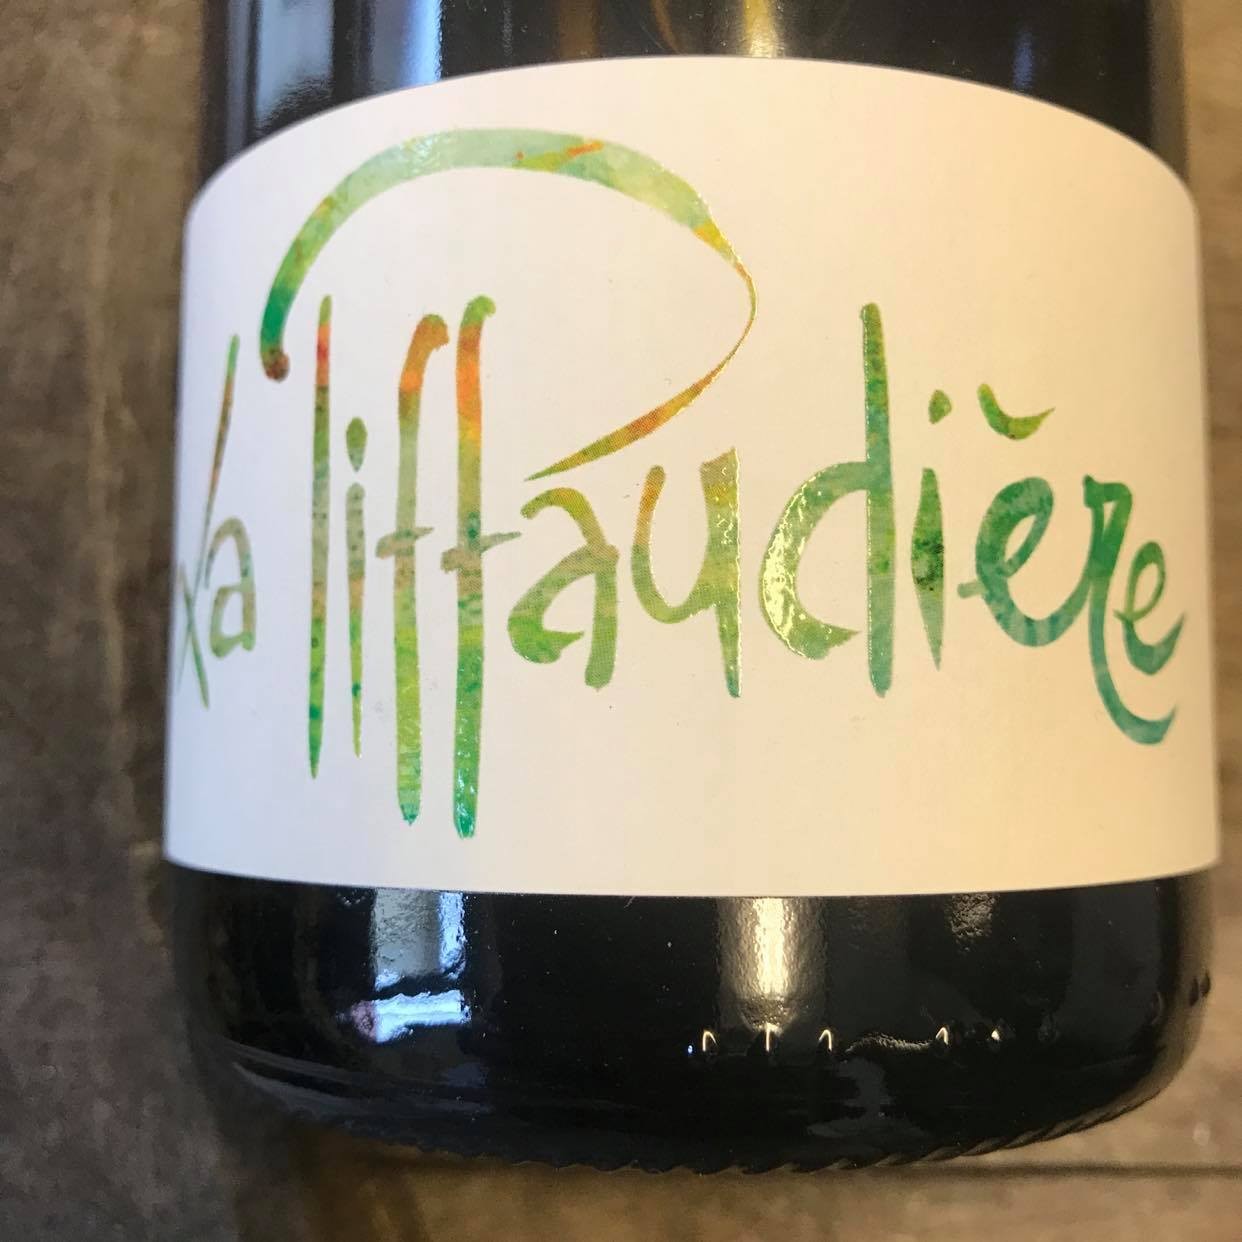 Blanc 2019 - La Piffaudière - JusdelaVigne